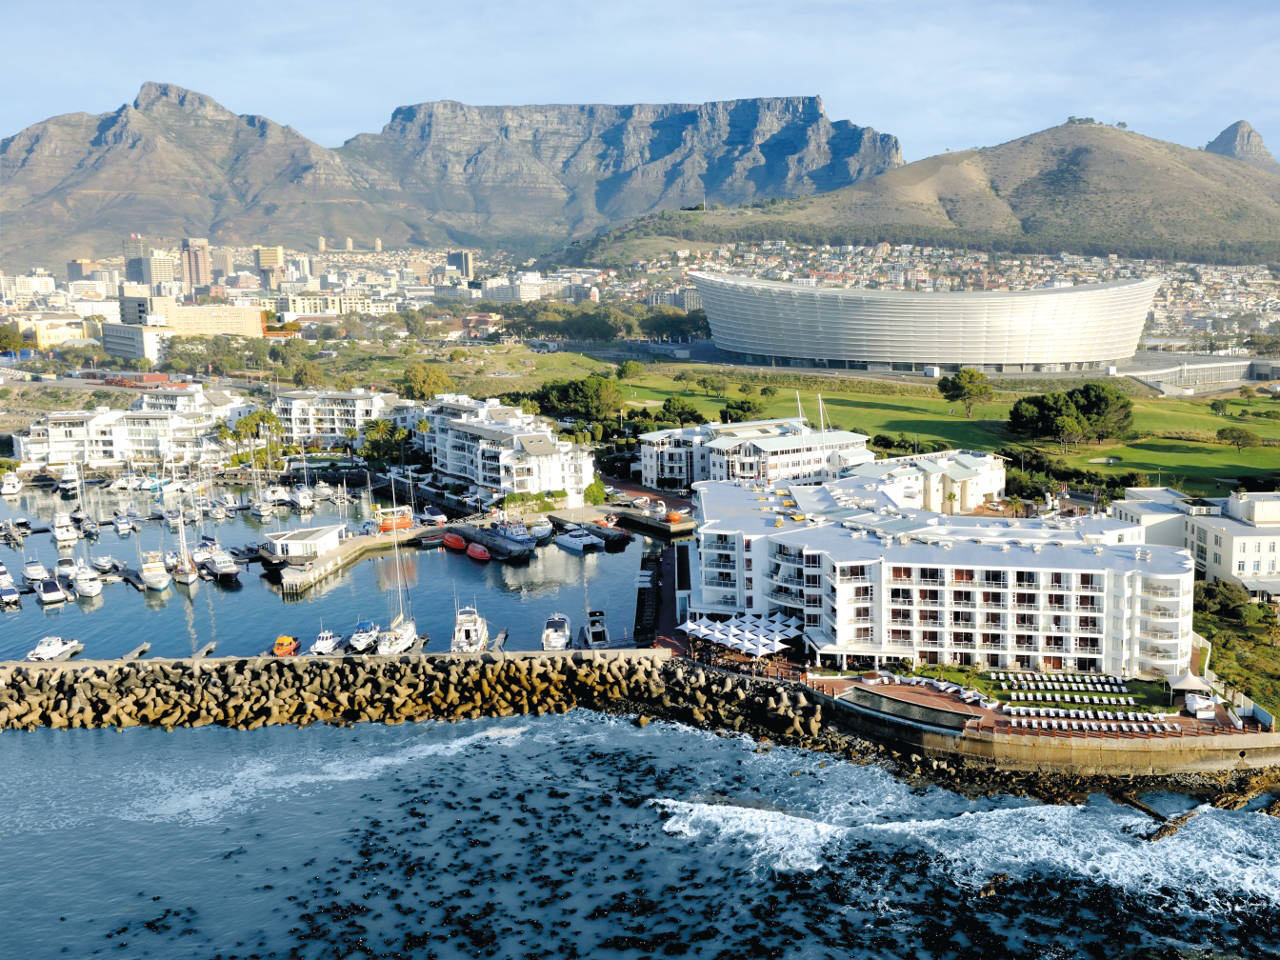 Radisson Blu Cape Town